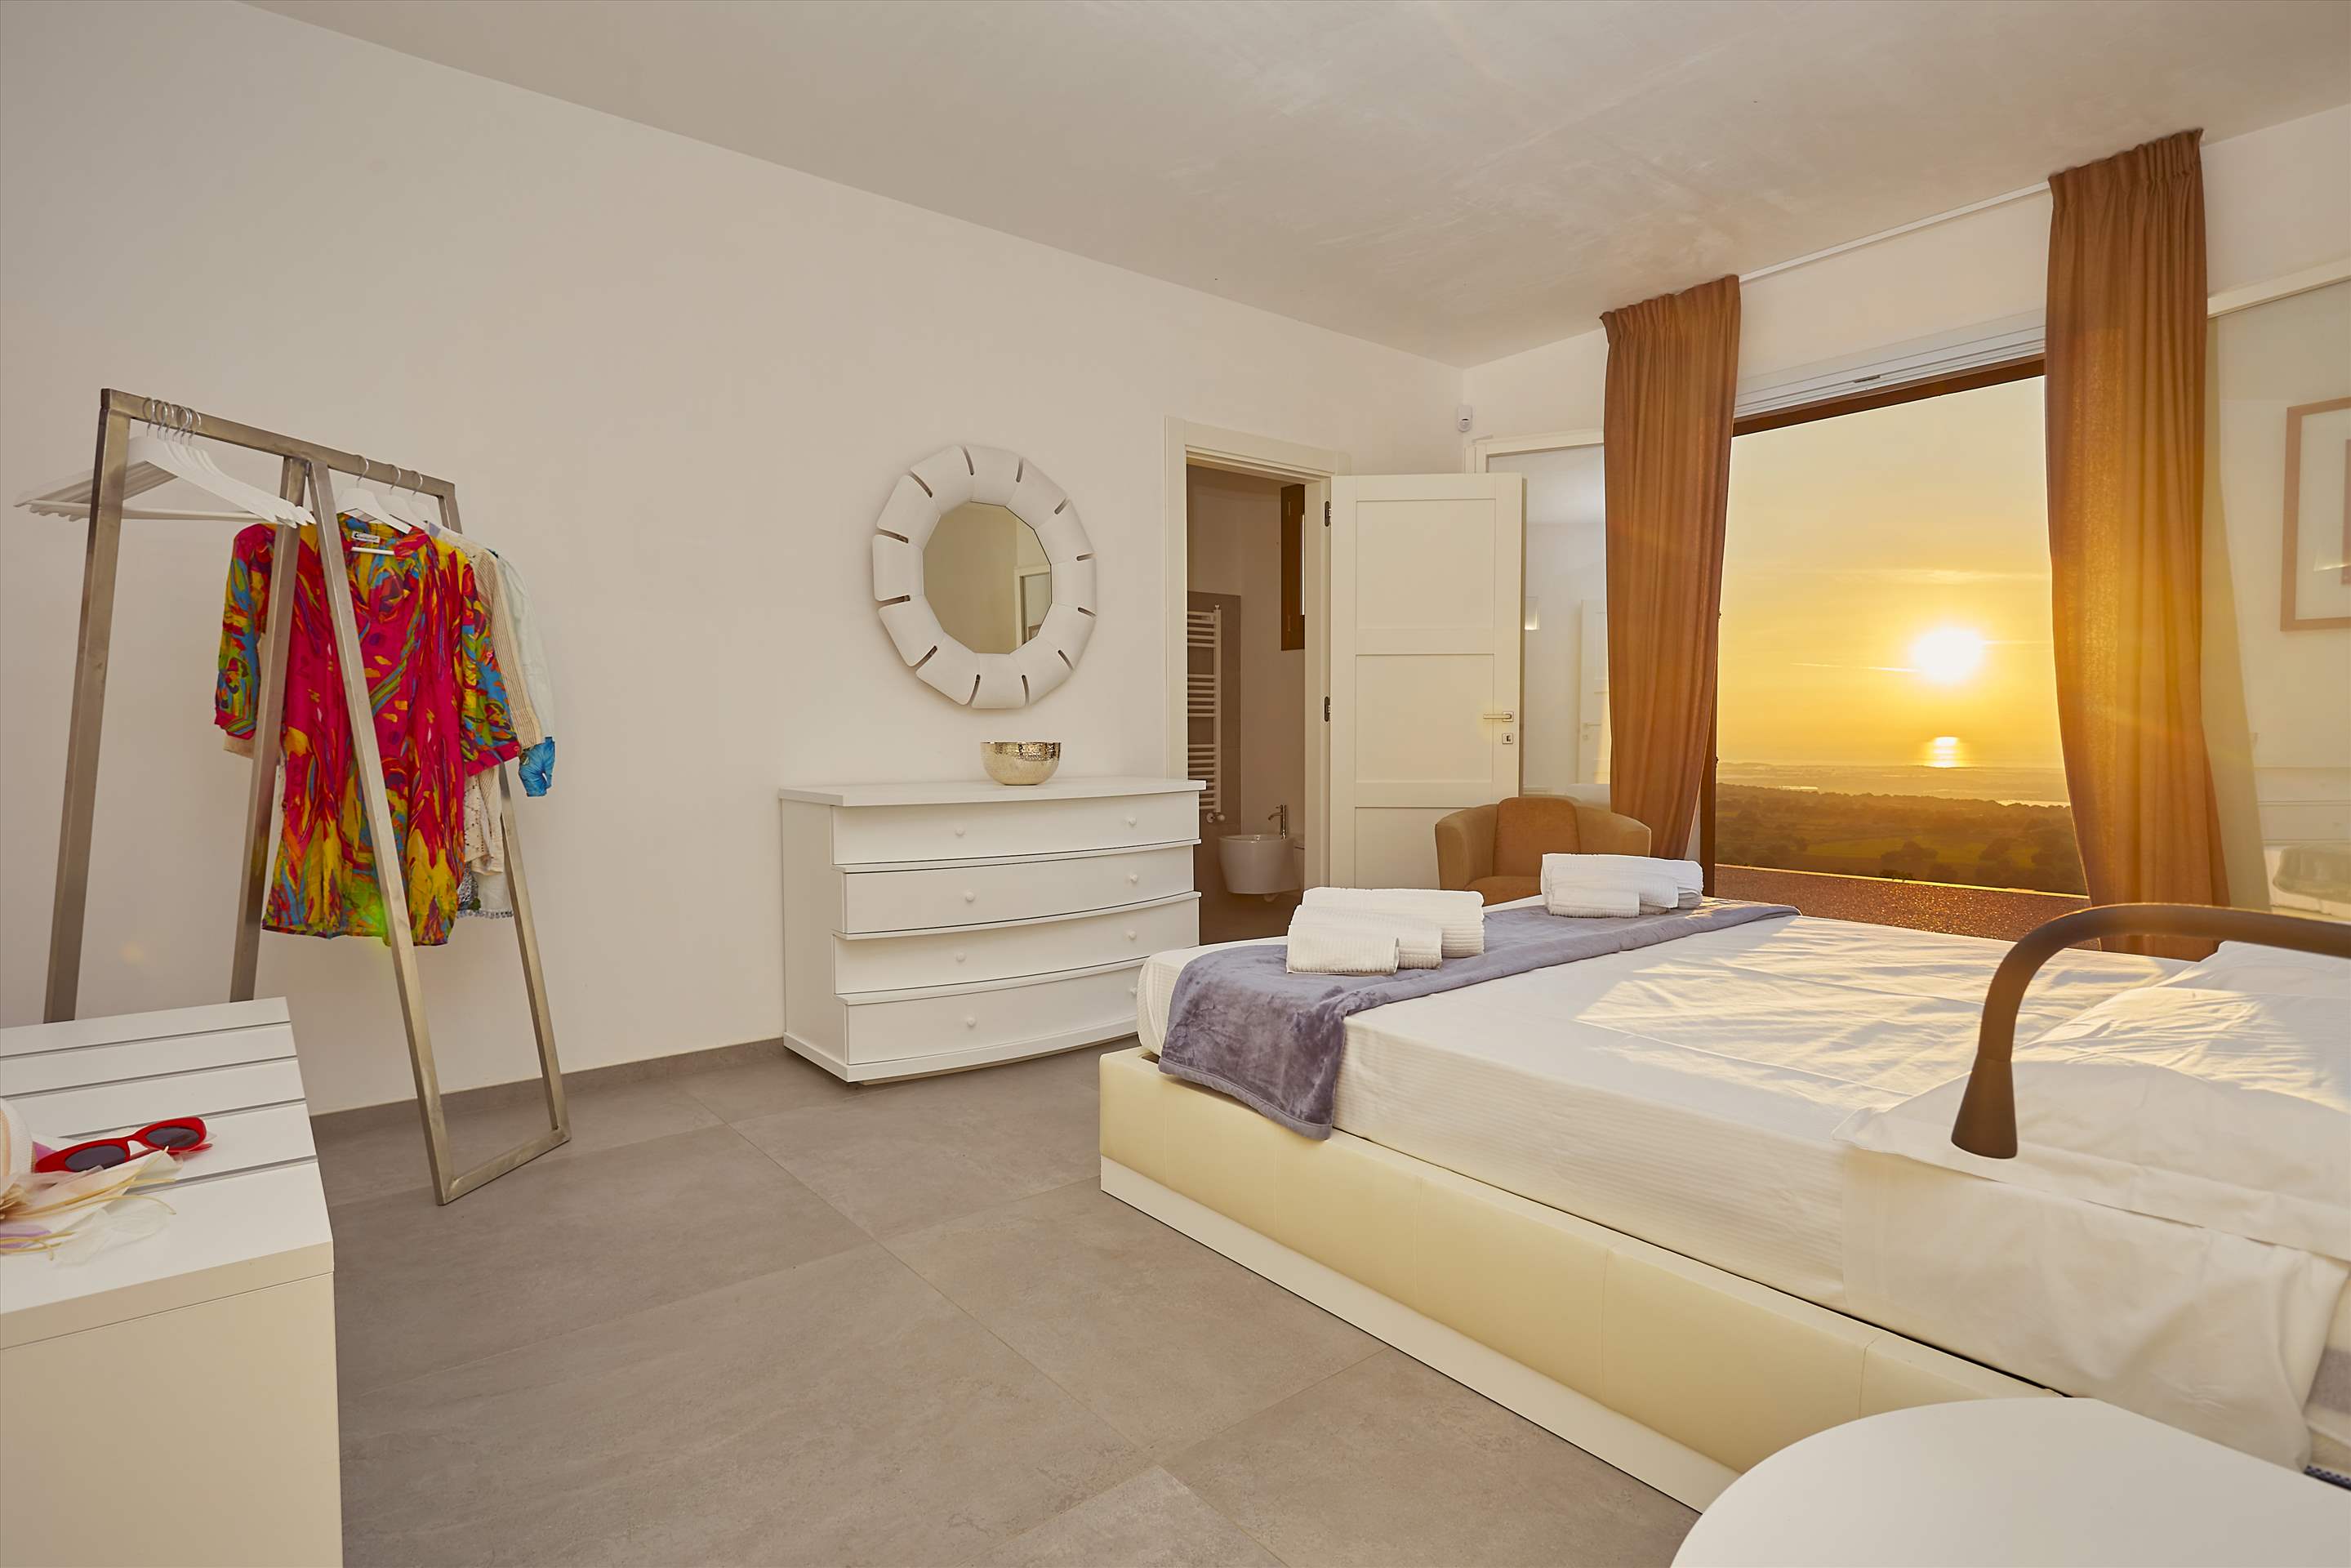 Bianca Ponente, 3 bedroom villa in Southern Sicily, Sicily Photo #10